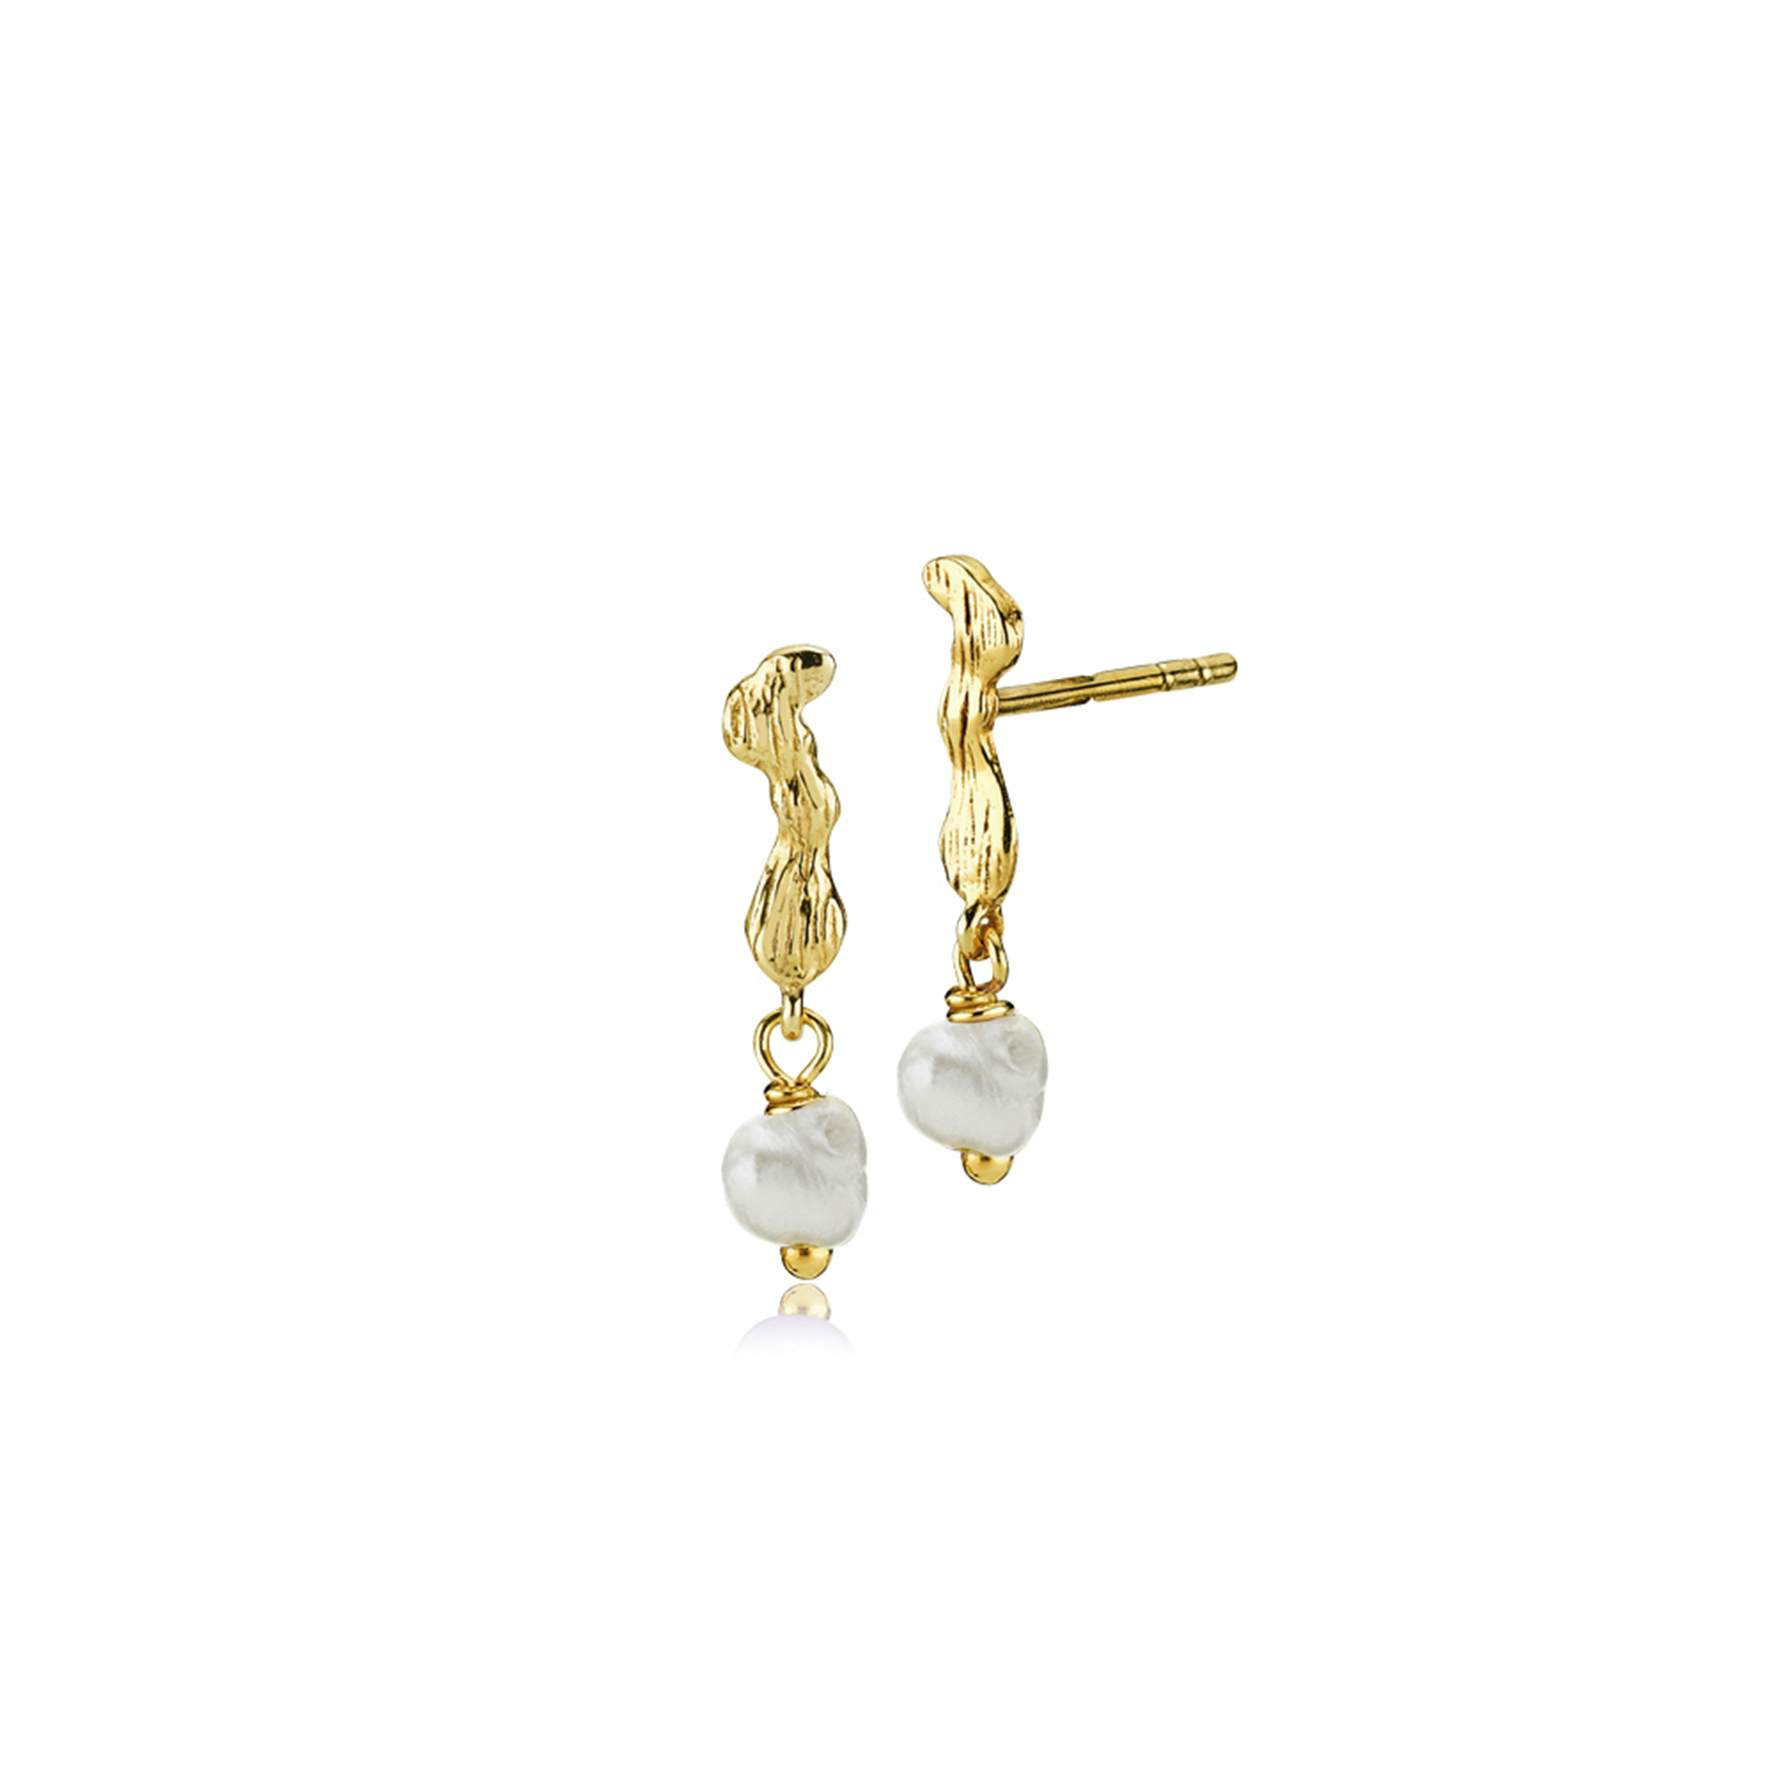 Lærke Bentsen By Sistie Earsticks With Pearls fra Sistie i Forgylt-Sølv Sterling 925|Freshwater Pearl